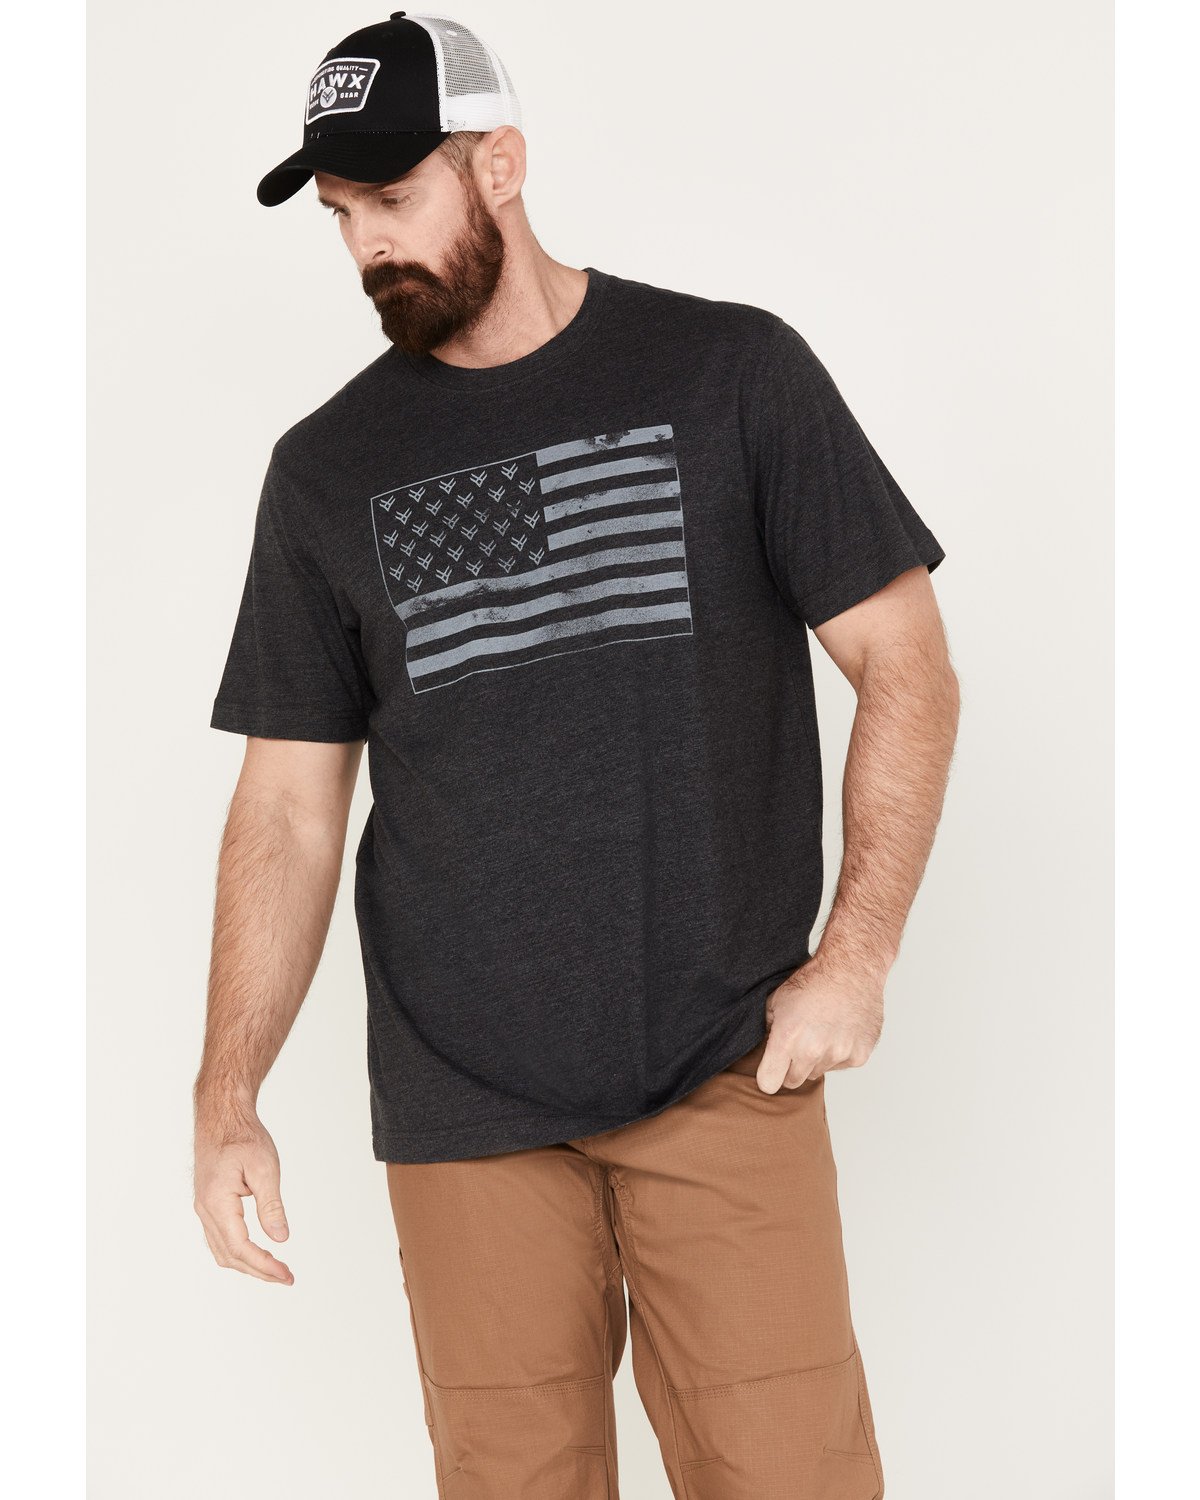 Hawx Men's Graphic Short Sleeve T-Shirt